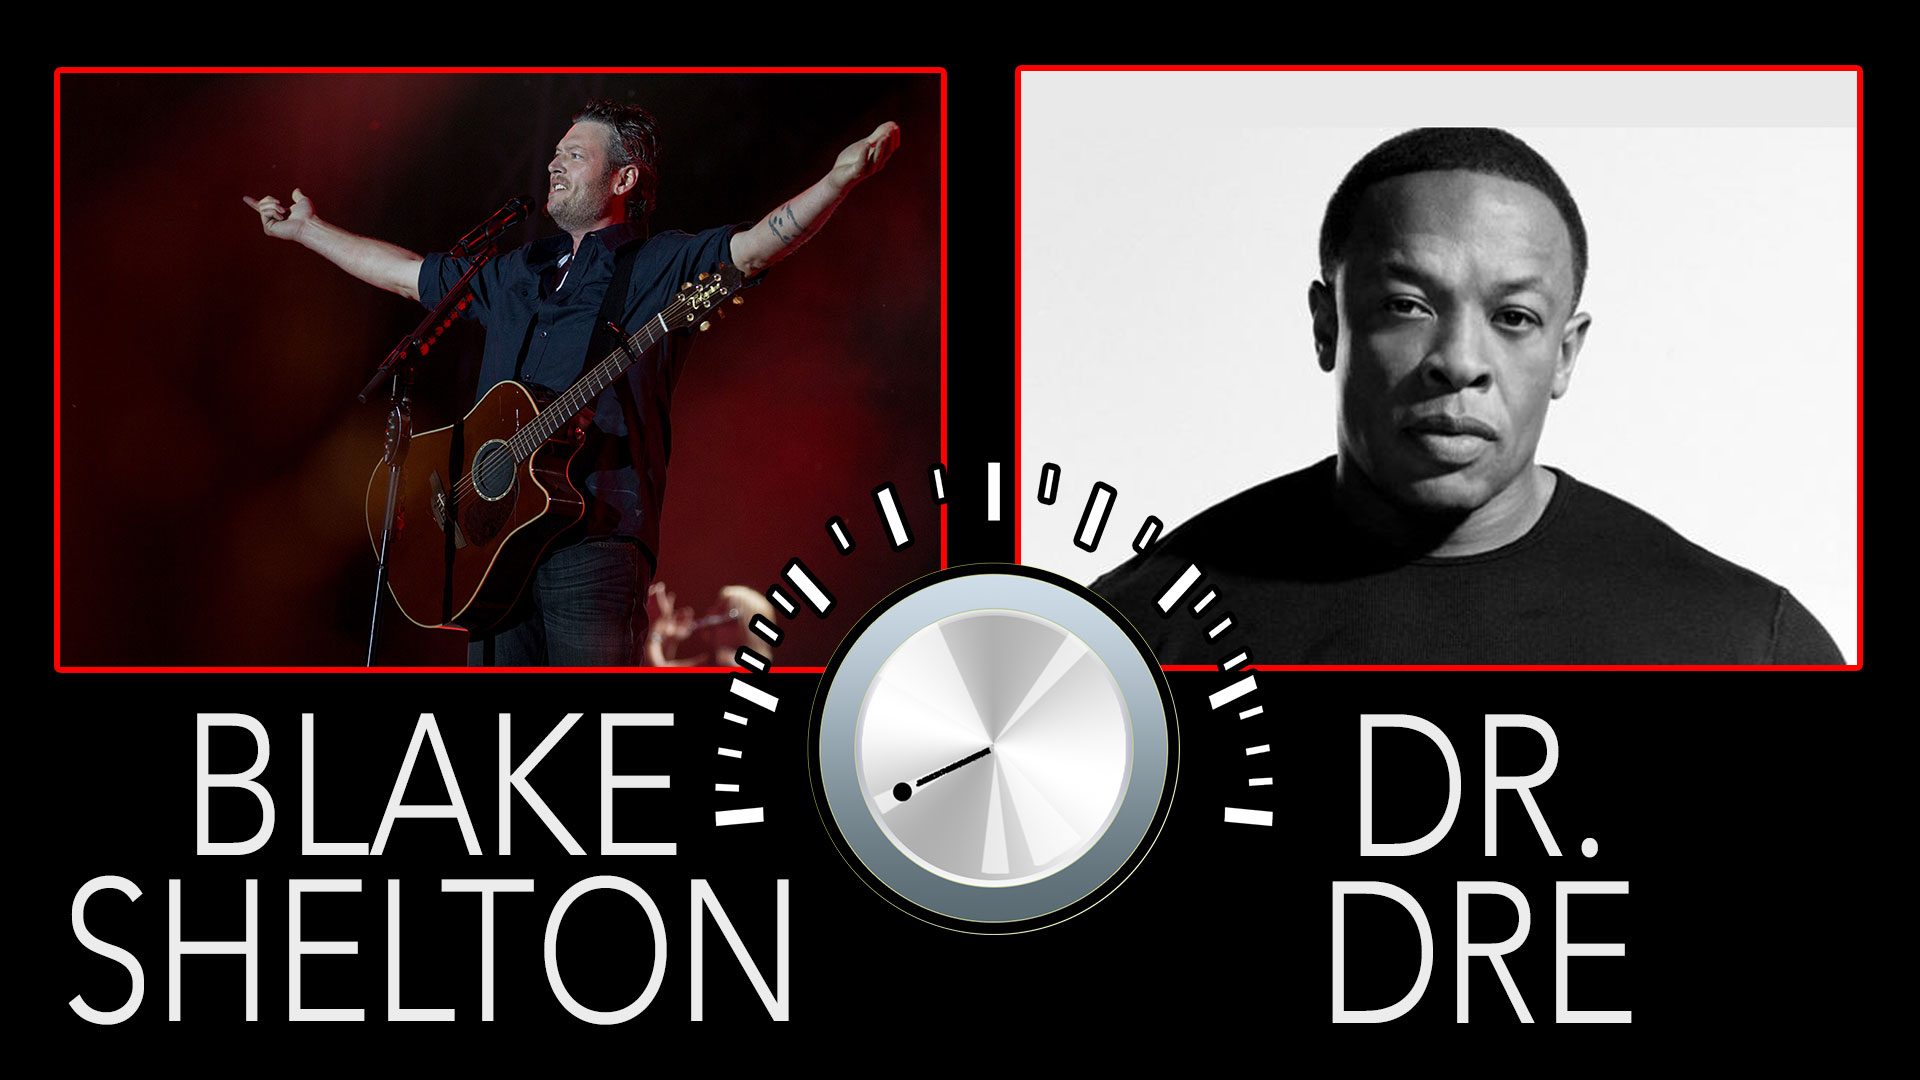 6 Degrees Of Music Collaboration: Blake Shelton To Dr. Dre - GRAMMY Awards Photos ...1920 x 1080